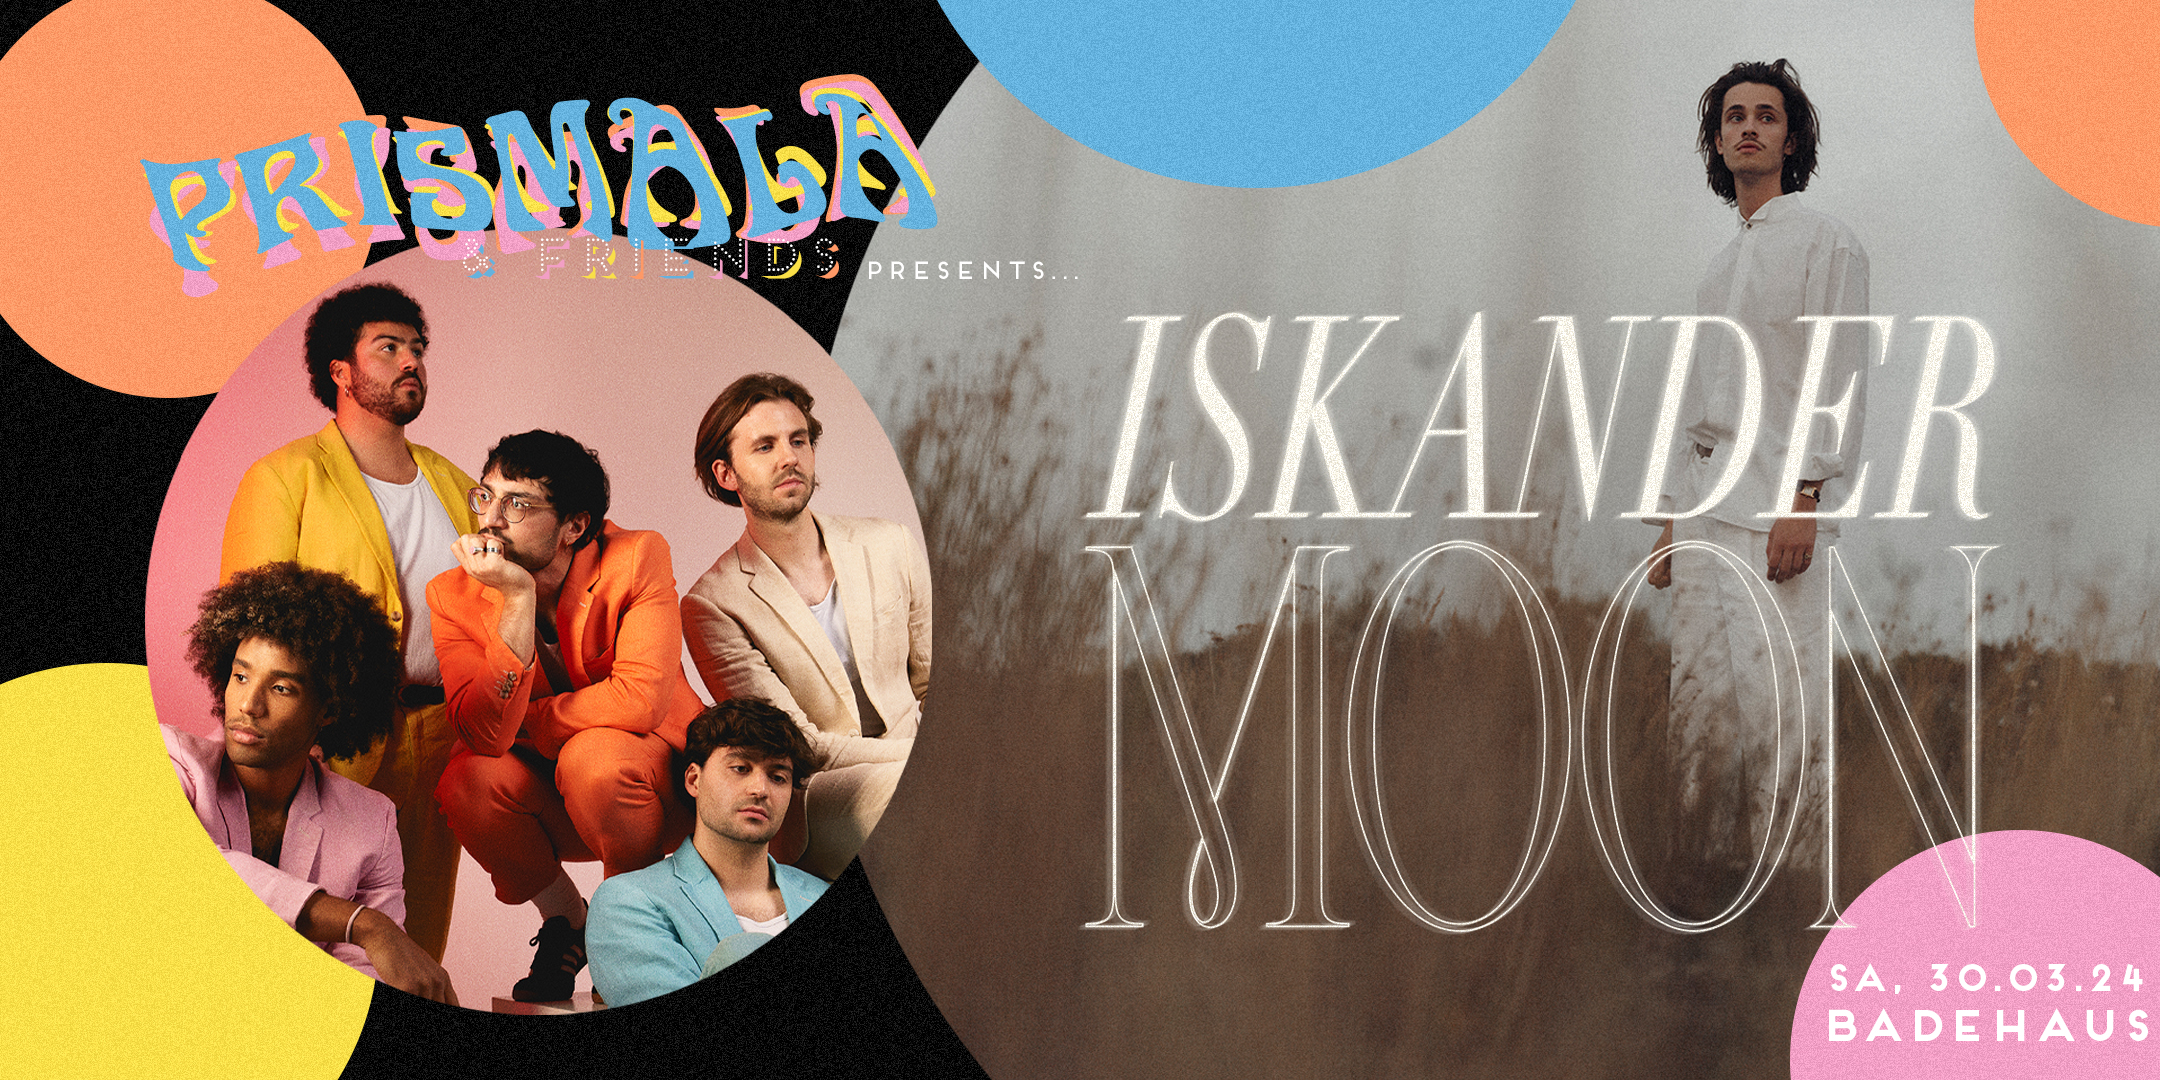 Prismala & Friends presents… Iskander Moon